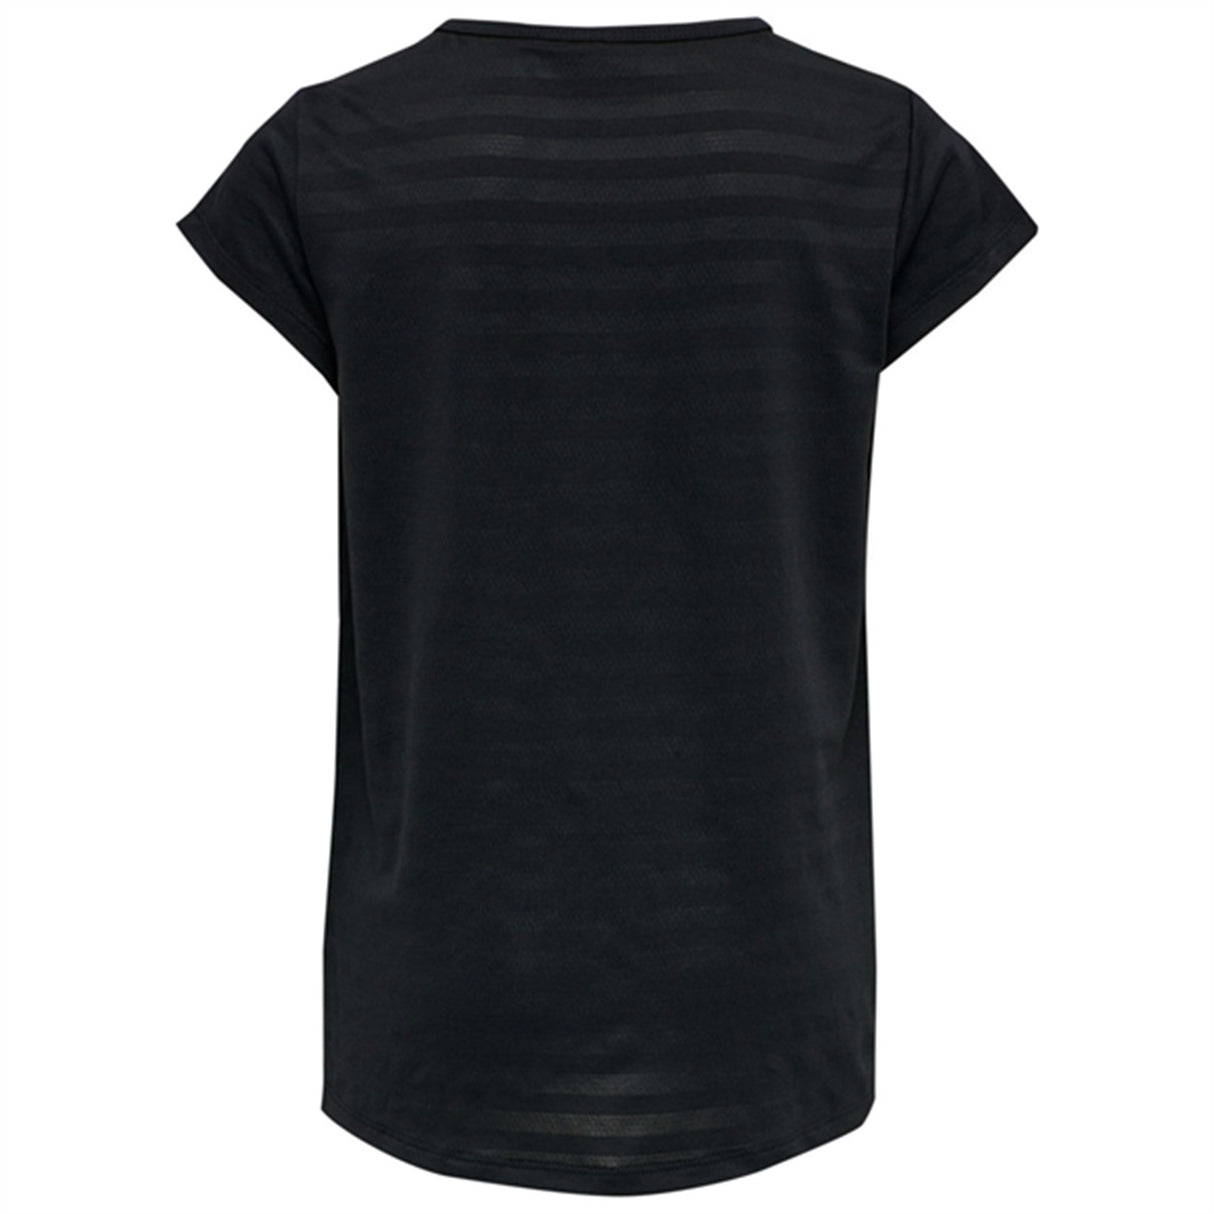 Hummel Black Nappkin T-Shirt 3